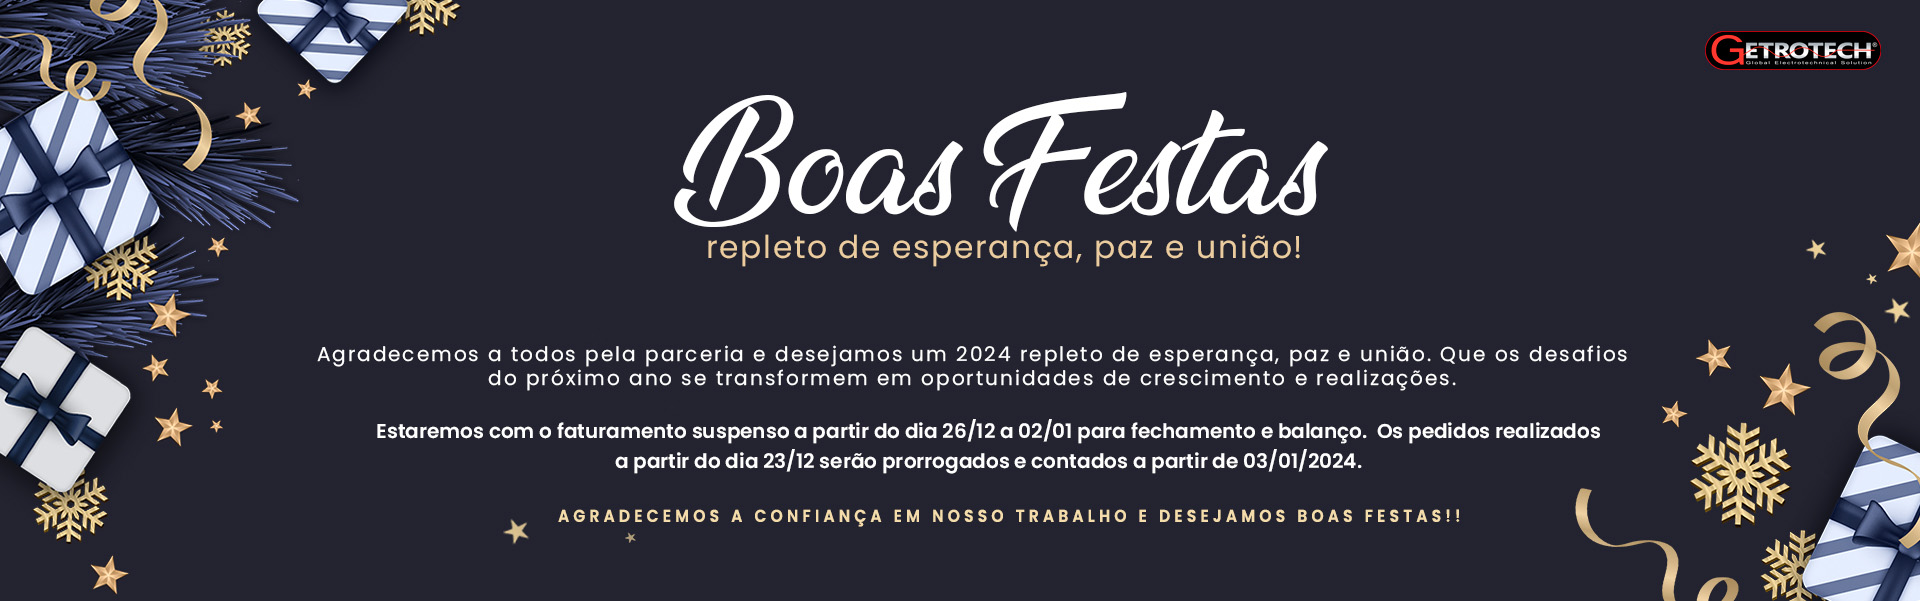 Banner Boas Festas